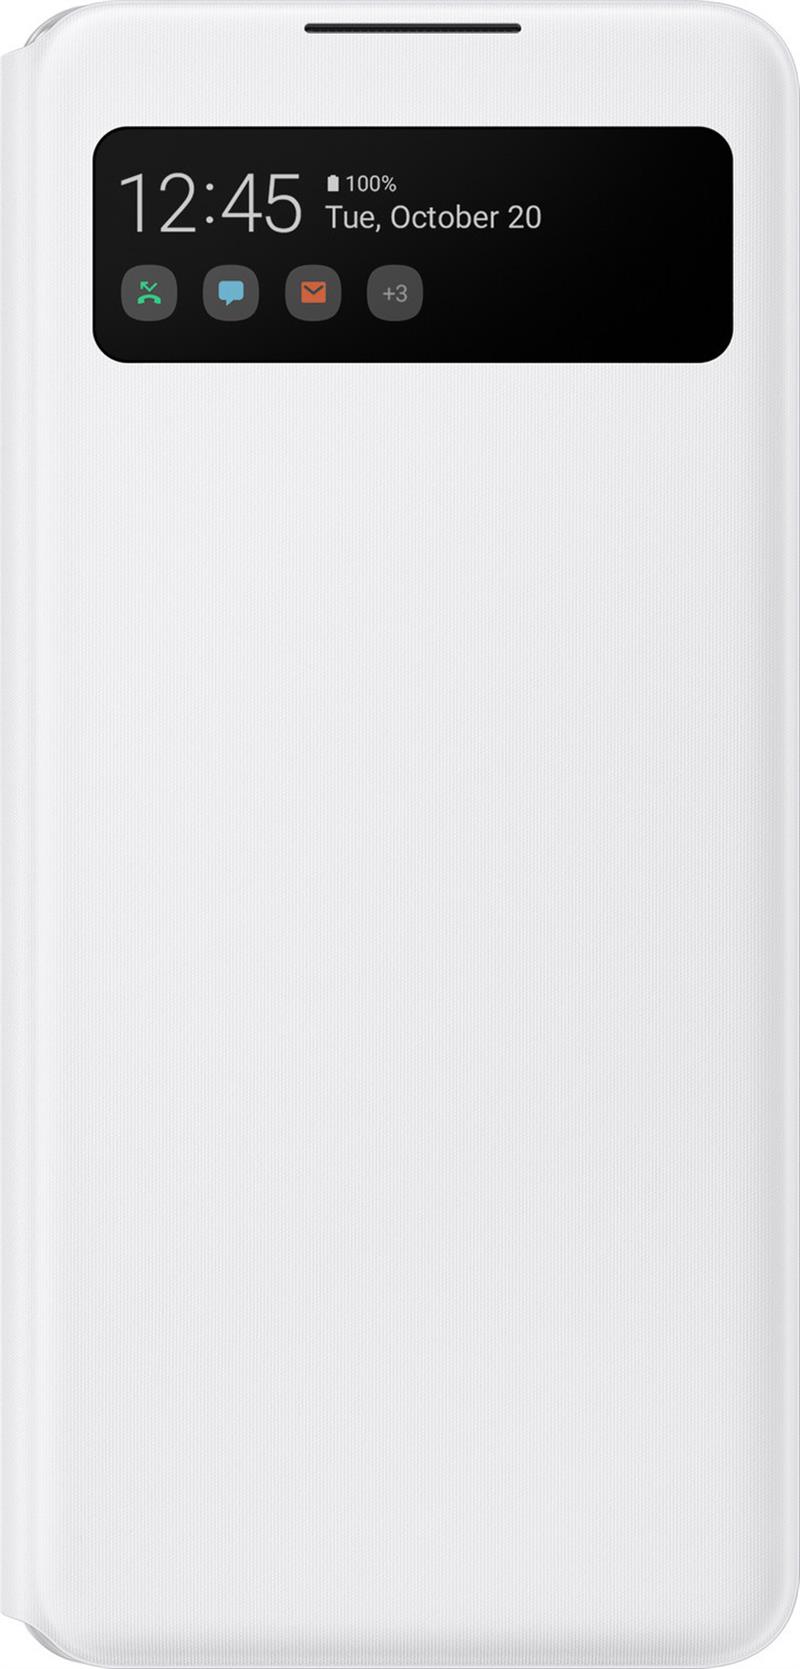 Samsung Galaxy A42 5G 2020 S-View Wallet Case White